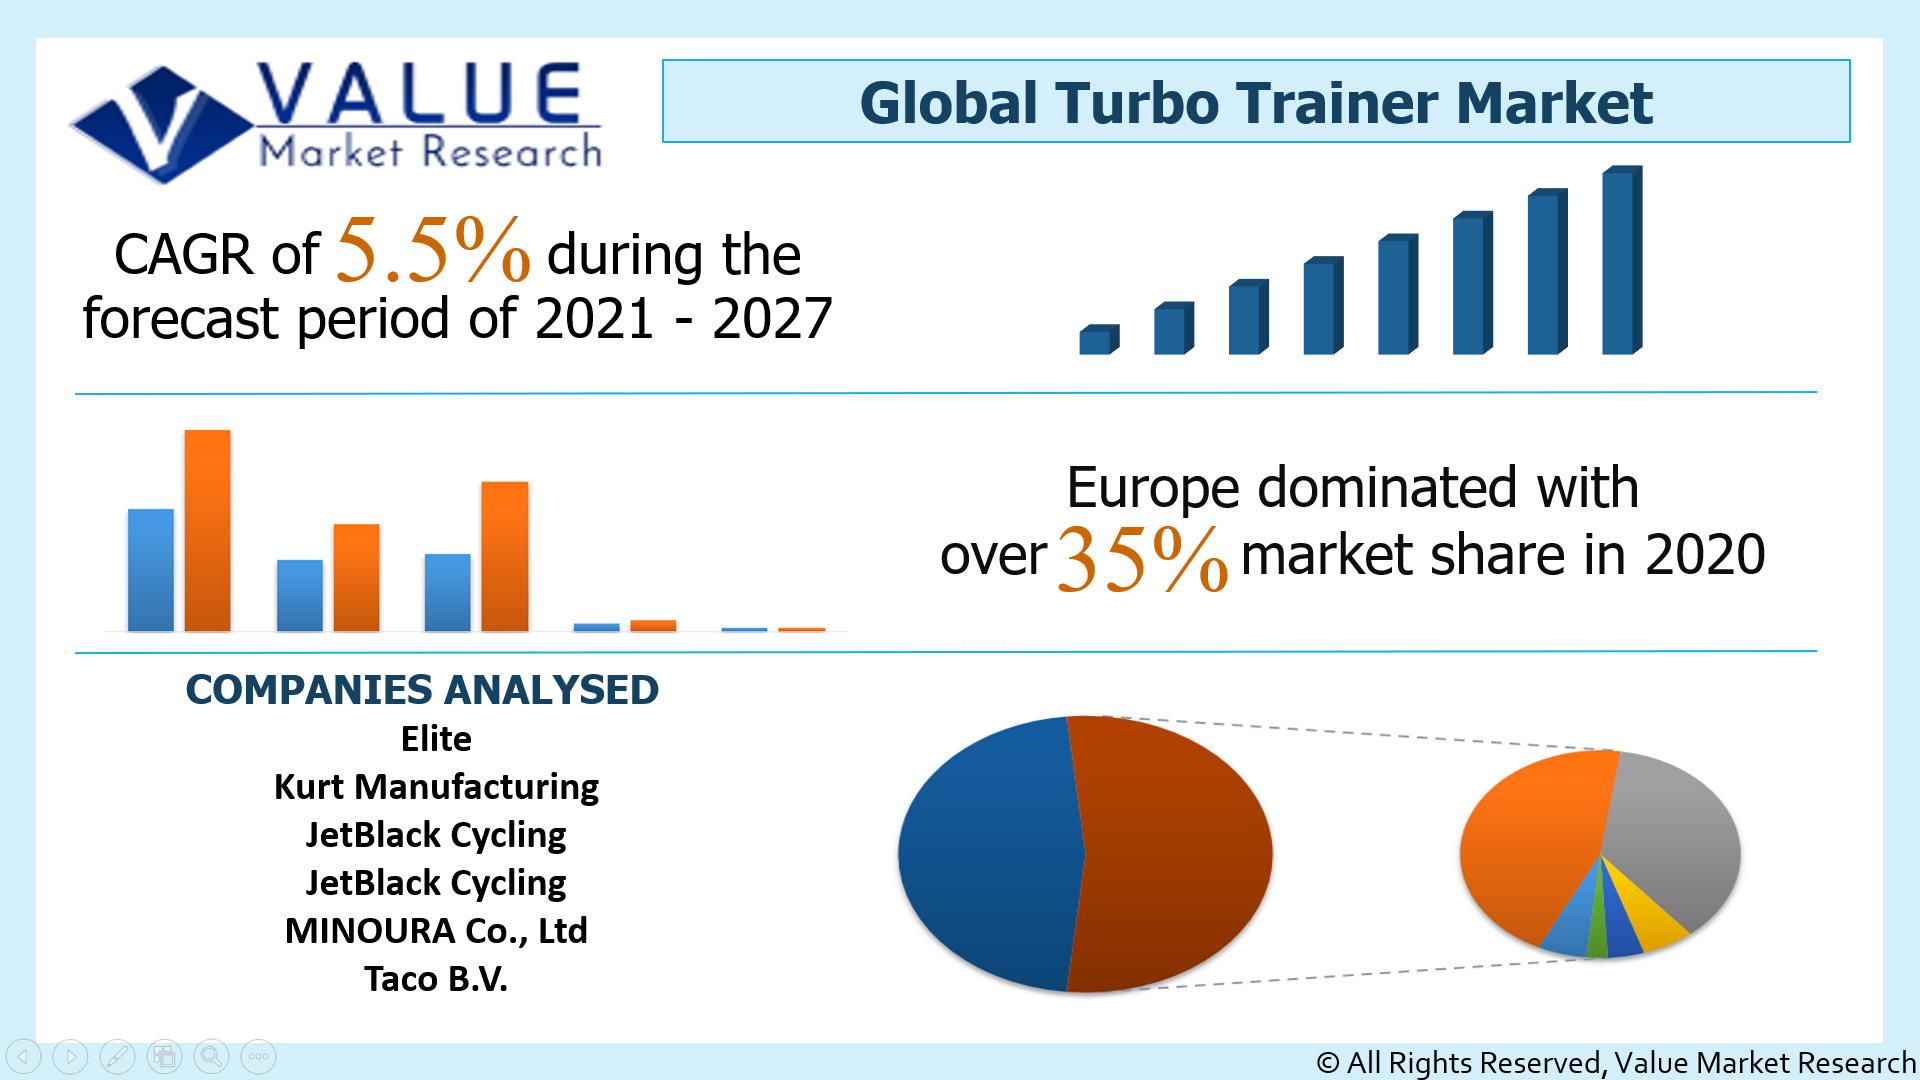 Global Turbo Trainer Market